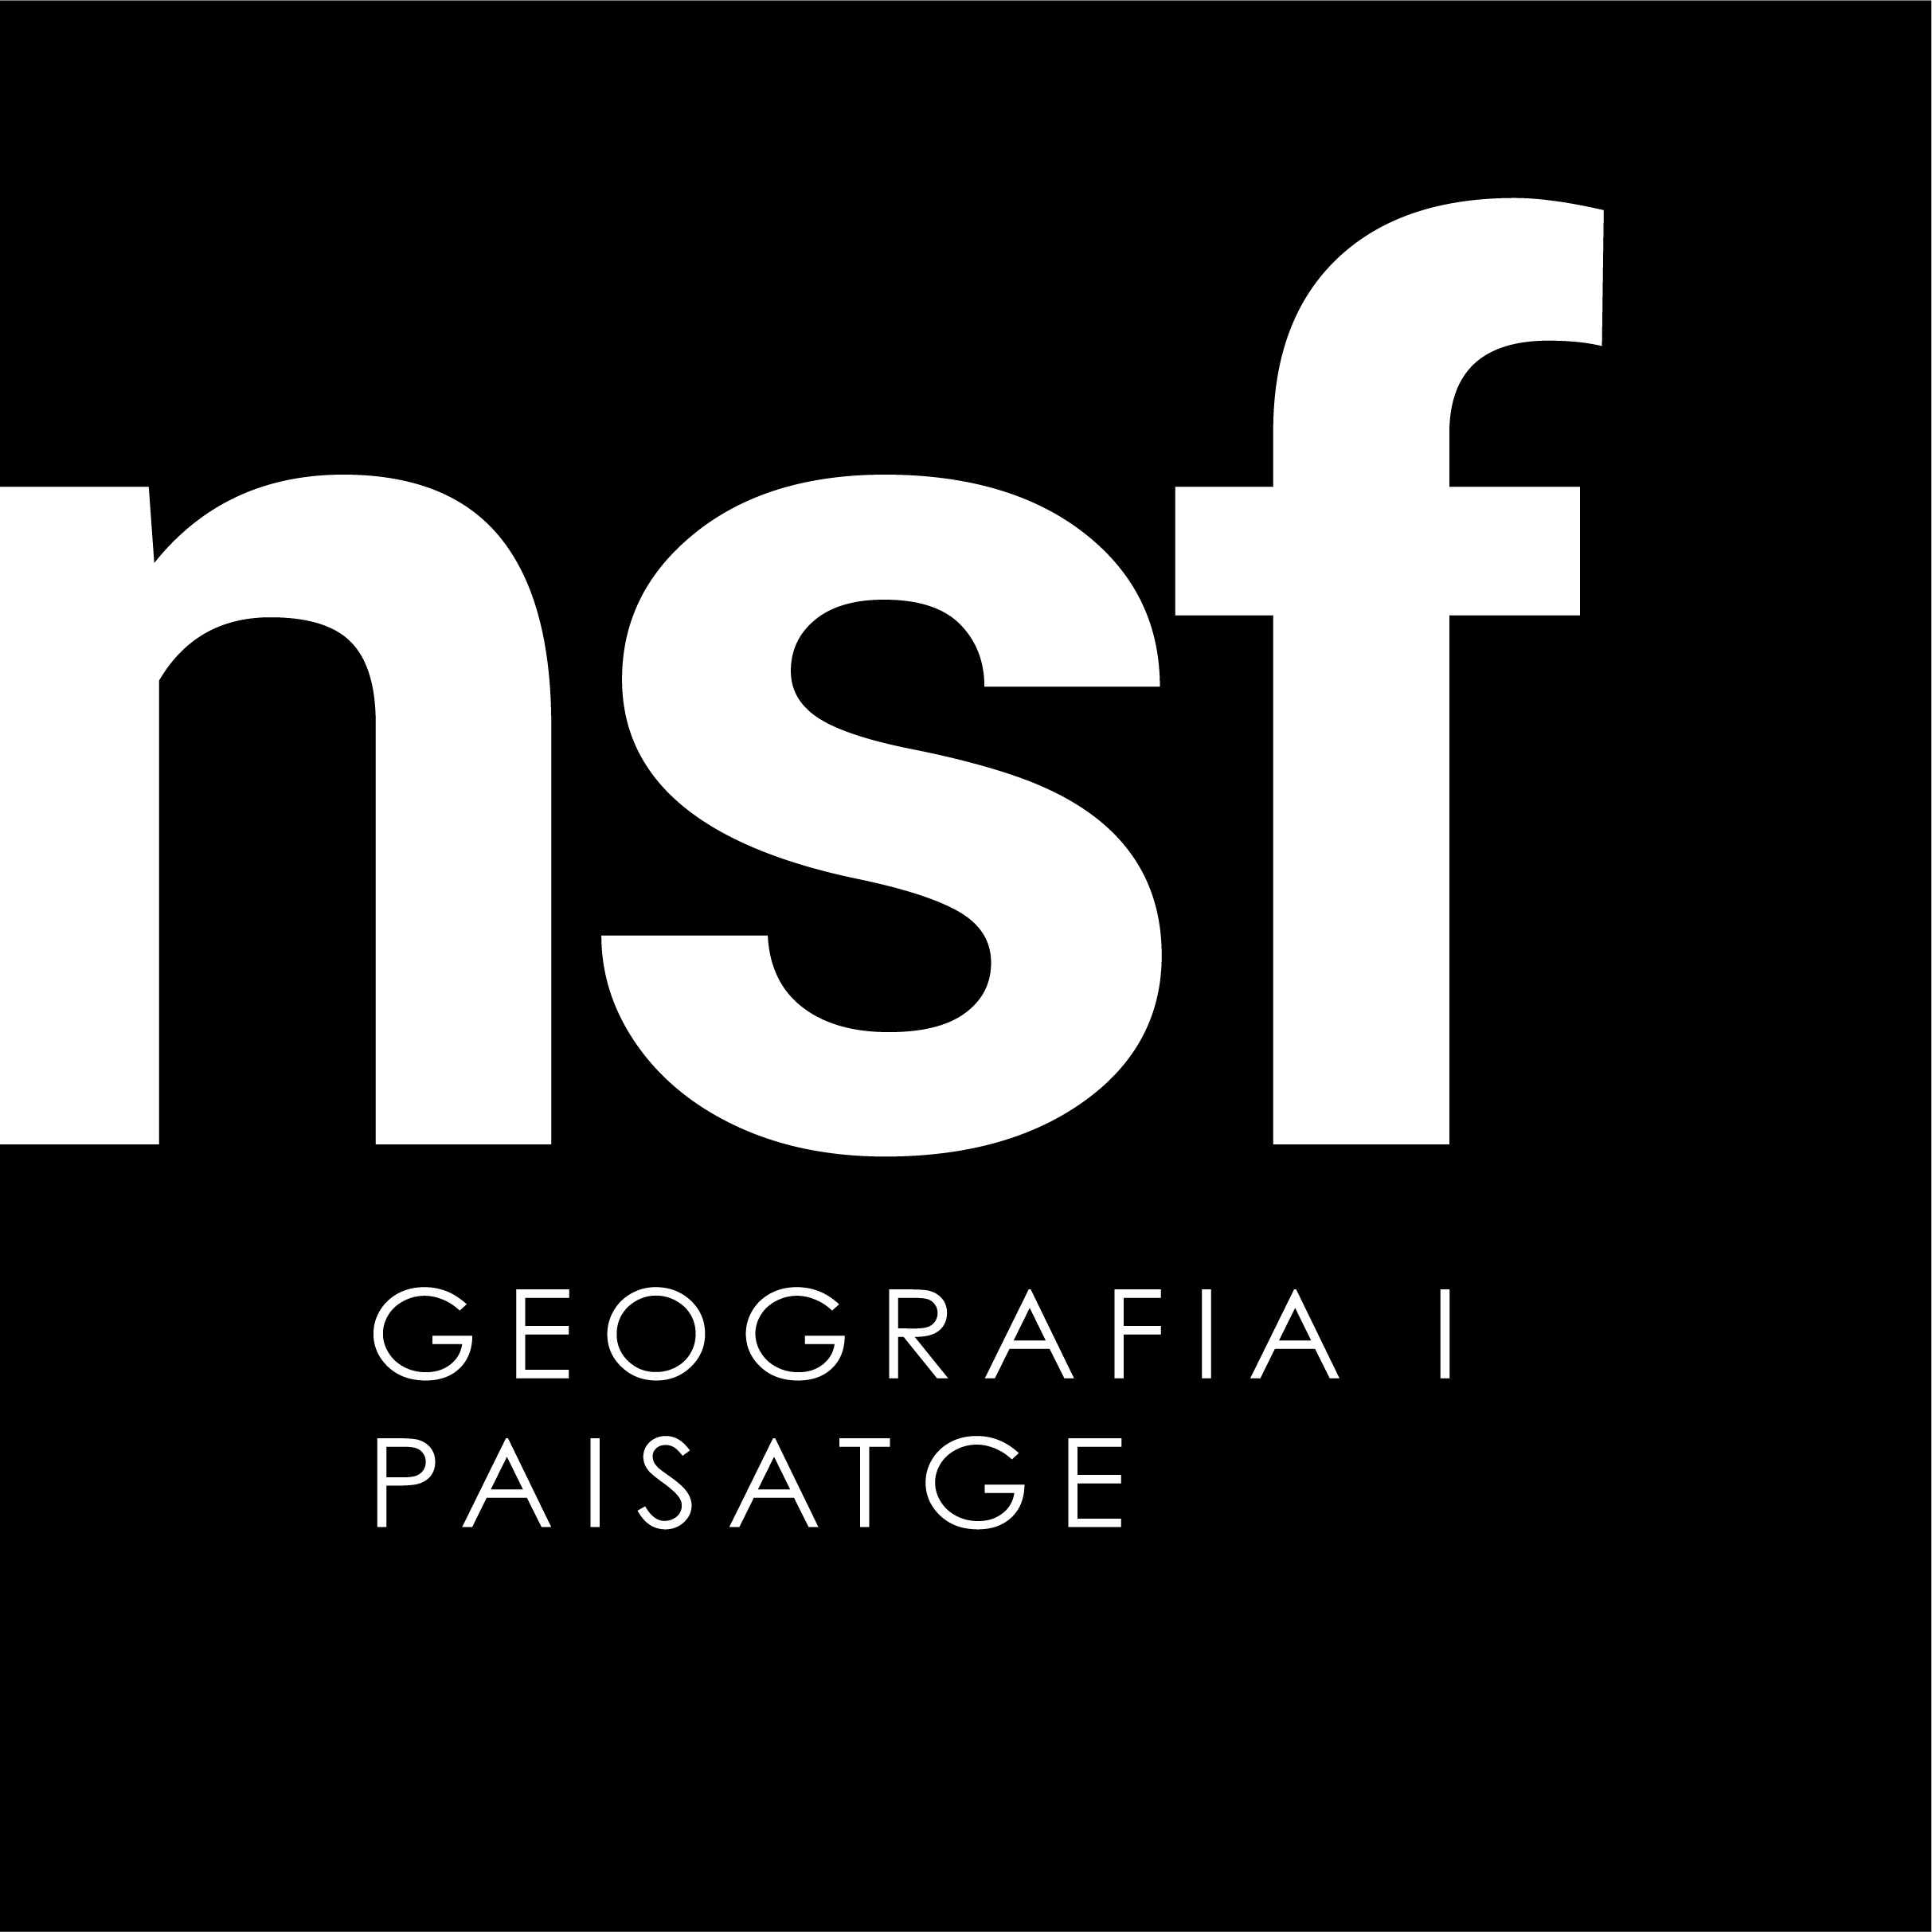 NSF Geografia i paisatge - Logotip